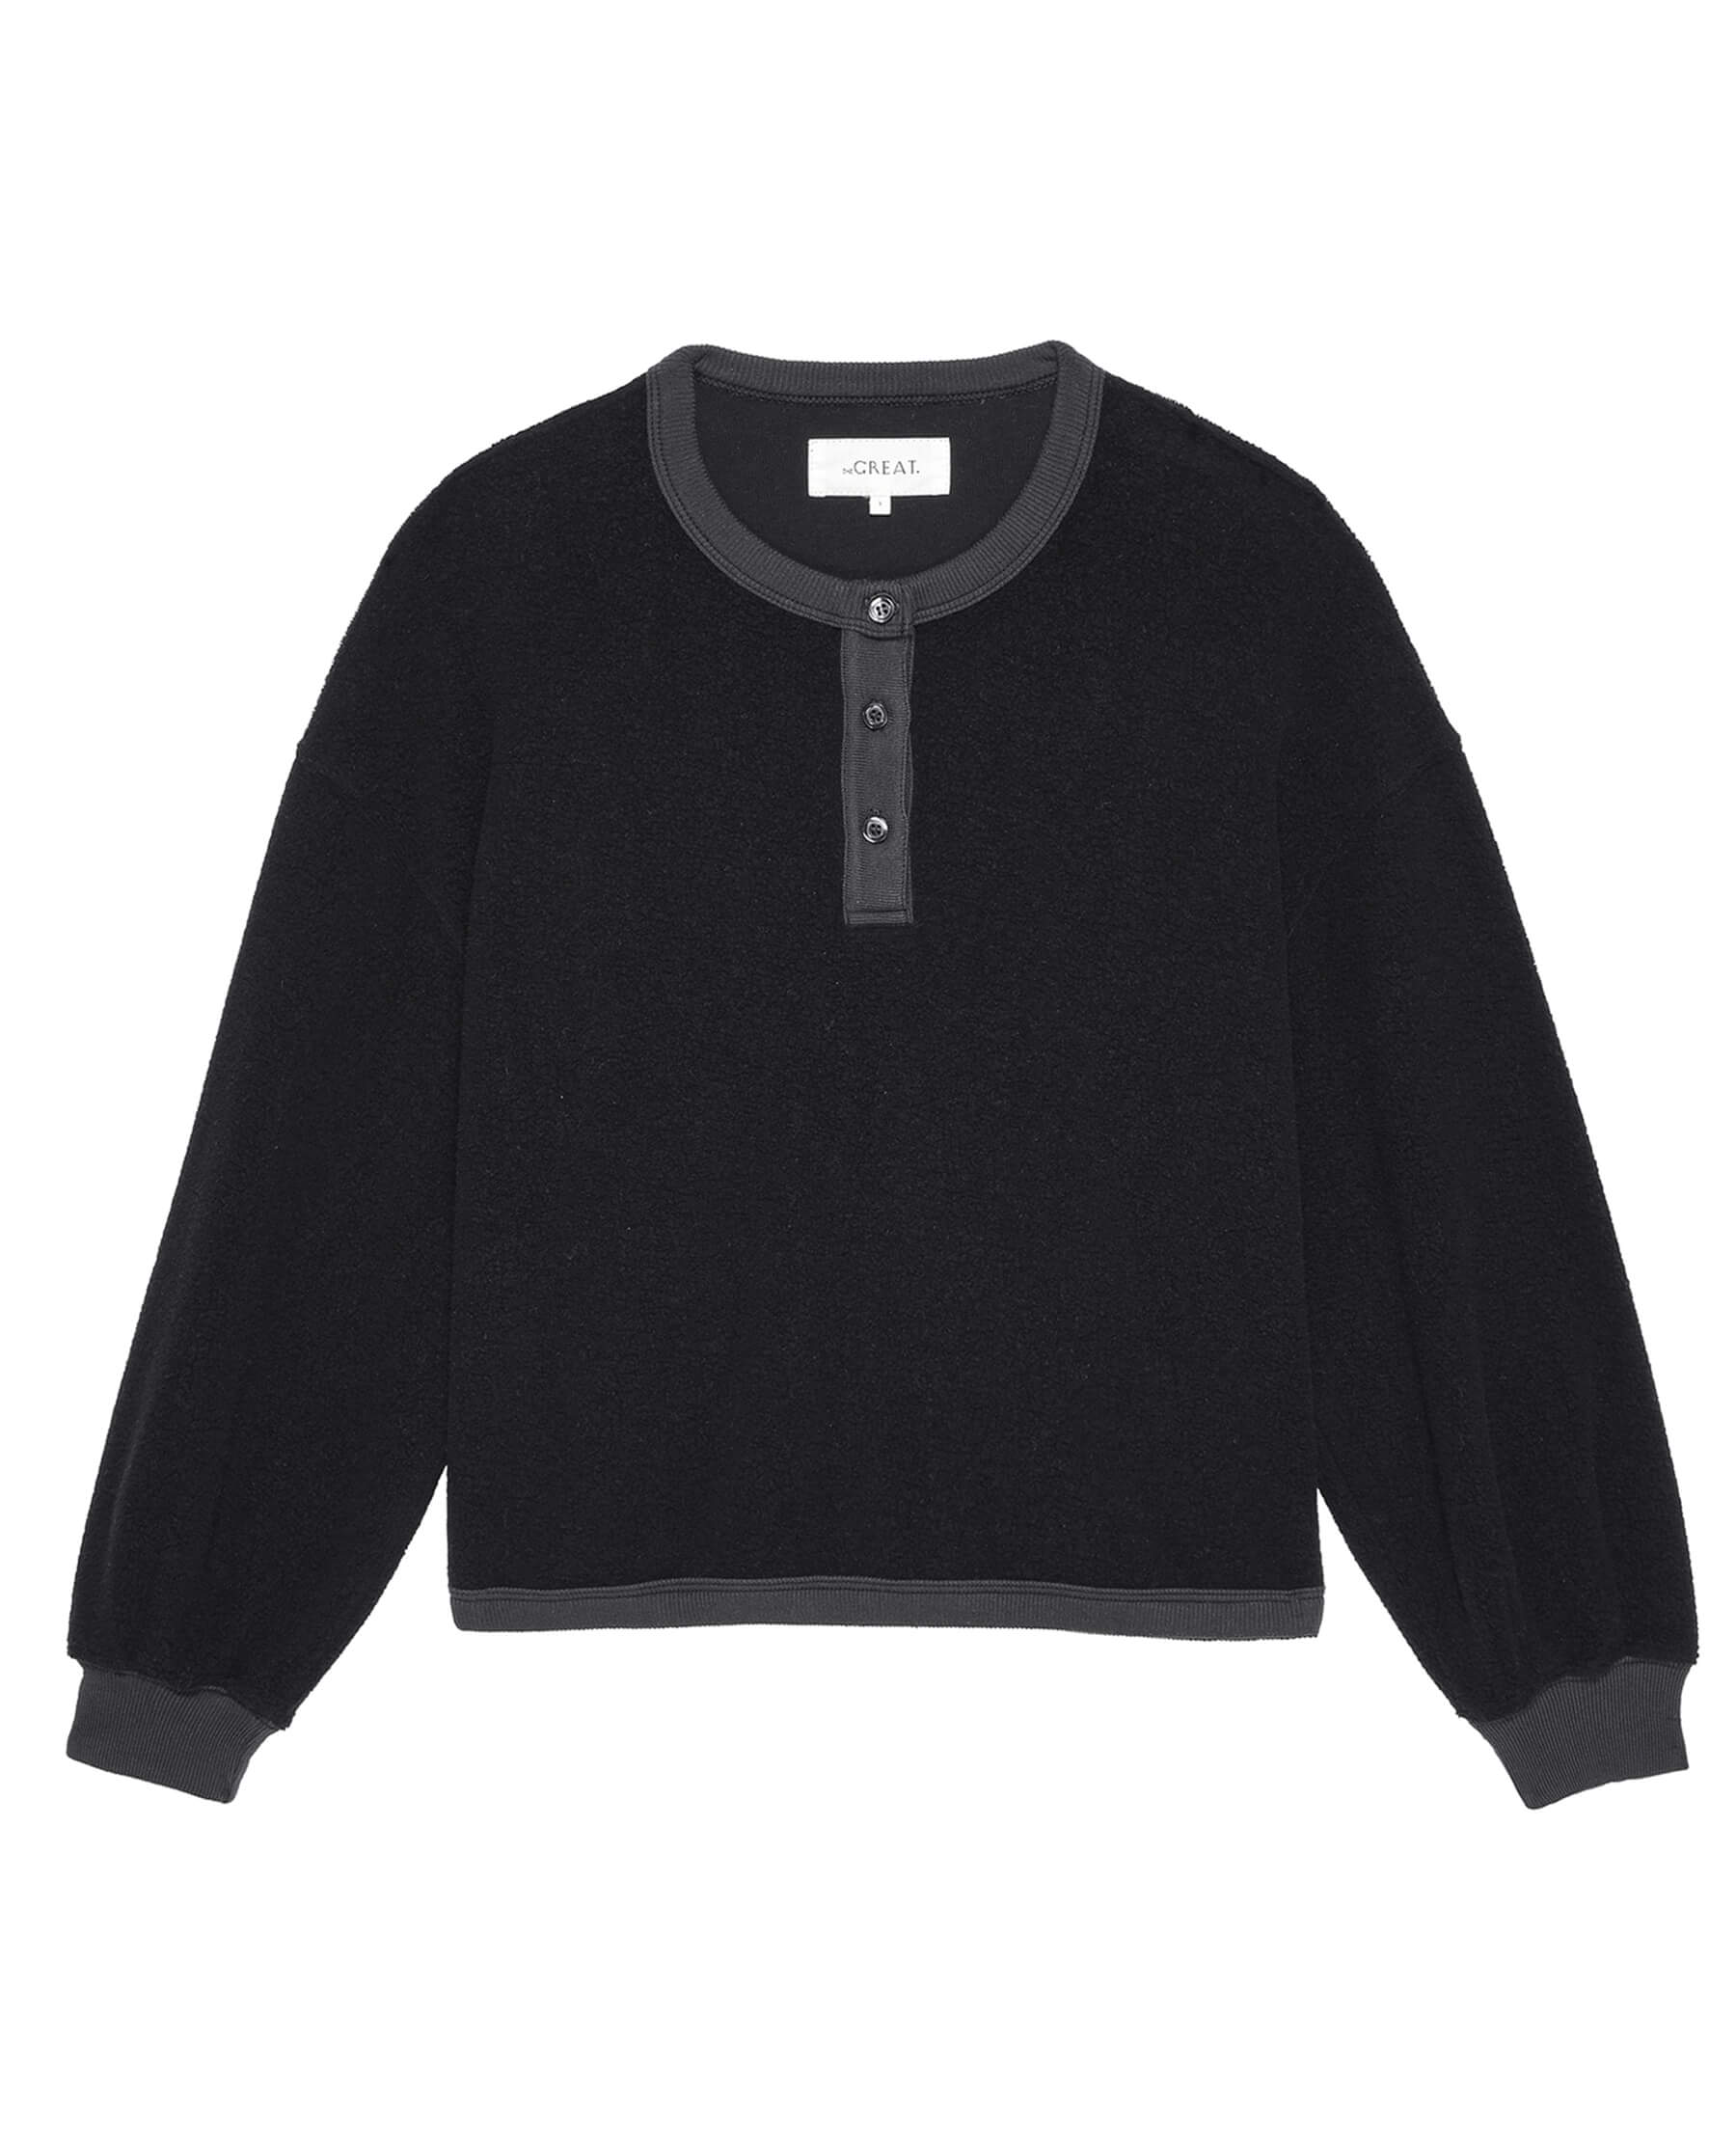 The Fleece Henley Sweatshirt. -- Almost Black SWEATSHIRTS THE GREAT. HOL 23 D1 SALE